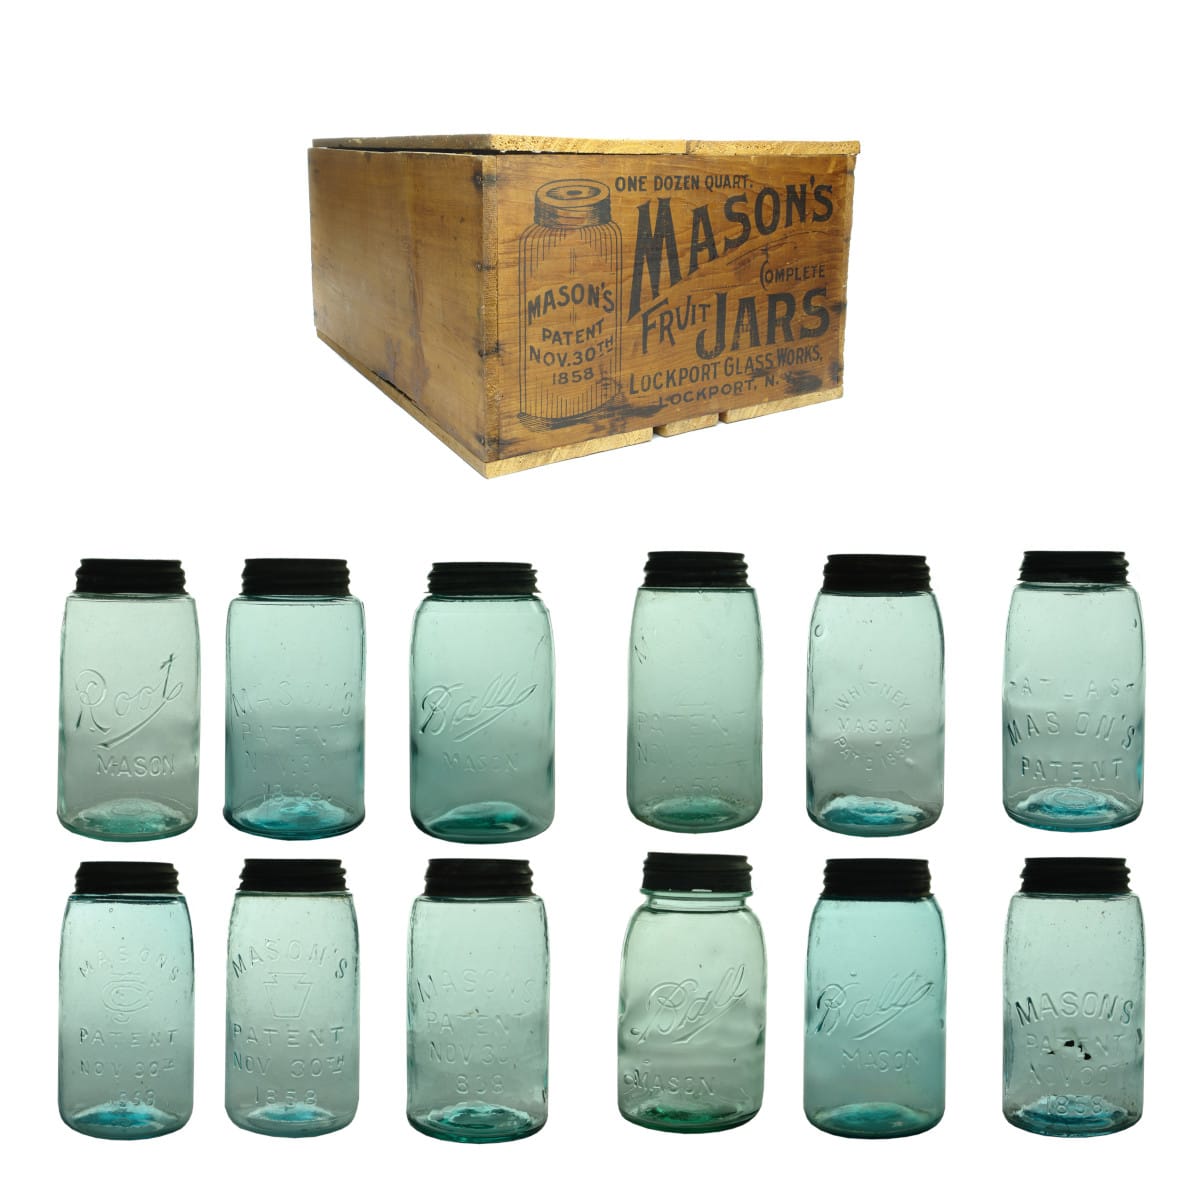 Jars. Original Wooden Box for Mason Fruit Jars, One Dozen Quart, Lockport Glass Works, New York! WITH 12 DIFFERENT Mason's Jars inside! (United States)